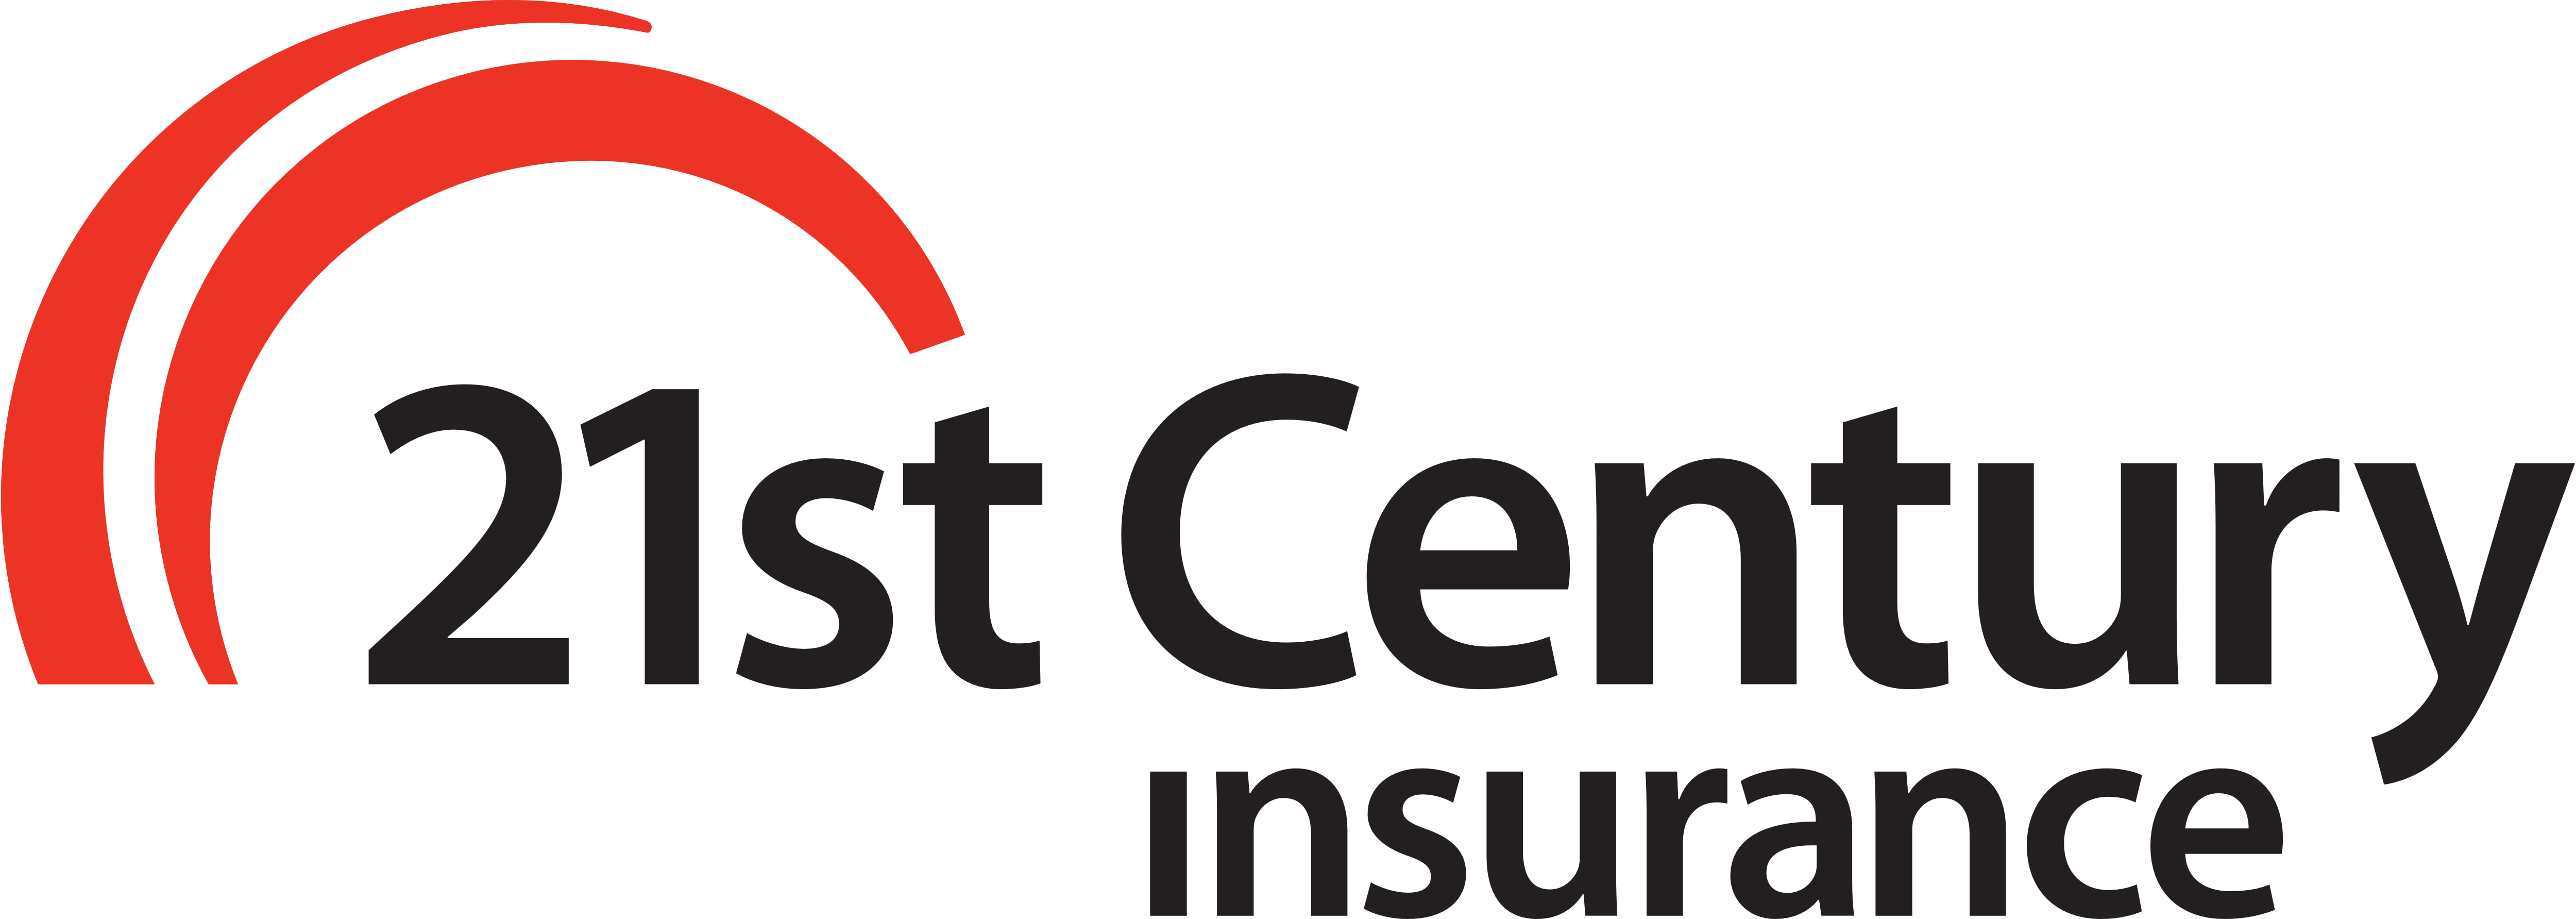 21st century auto insurance png logo #5742